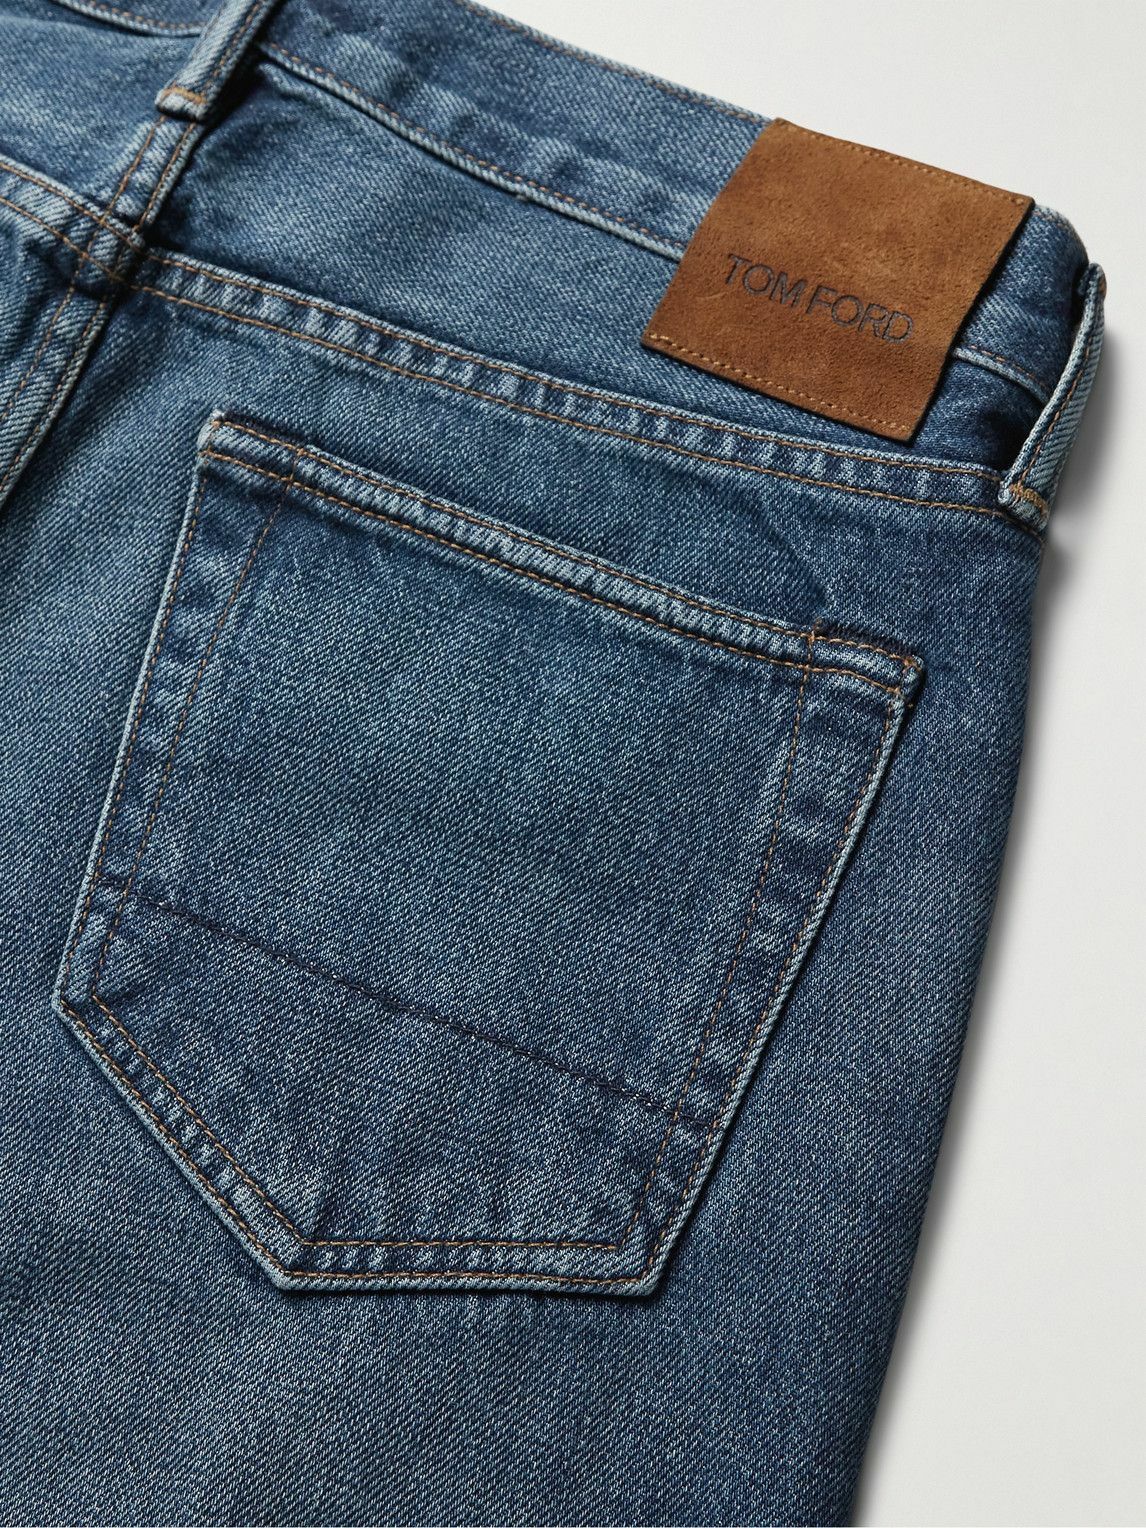 TOM FORD - Straight-Leg Garment-Washed Selvedge Jeans - Blue TOM FORD